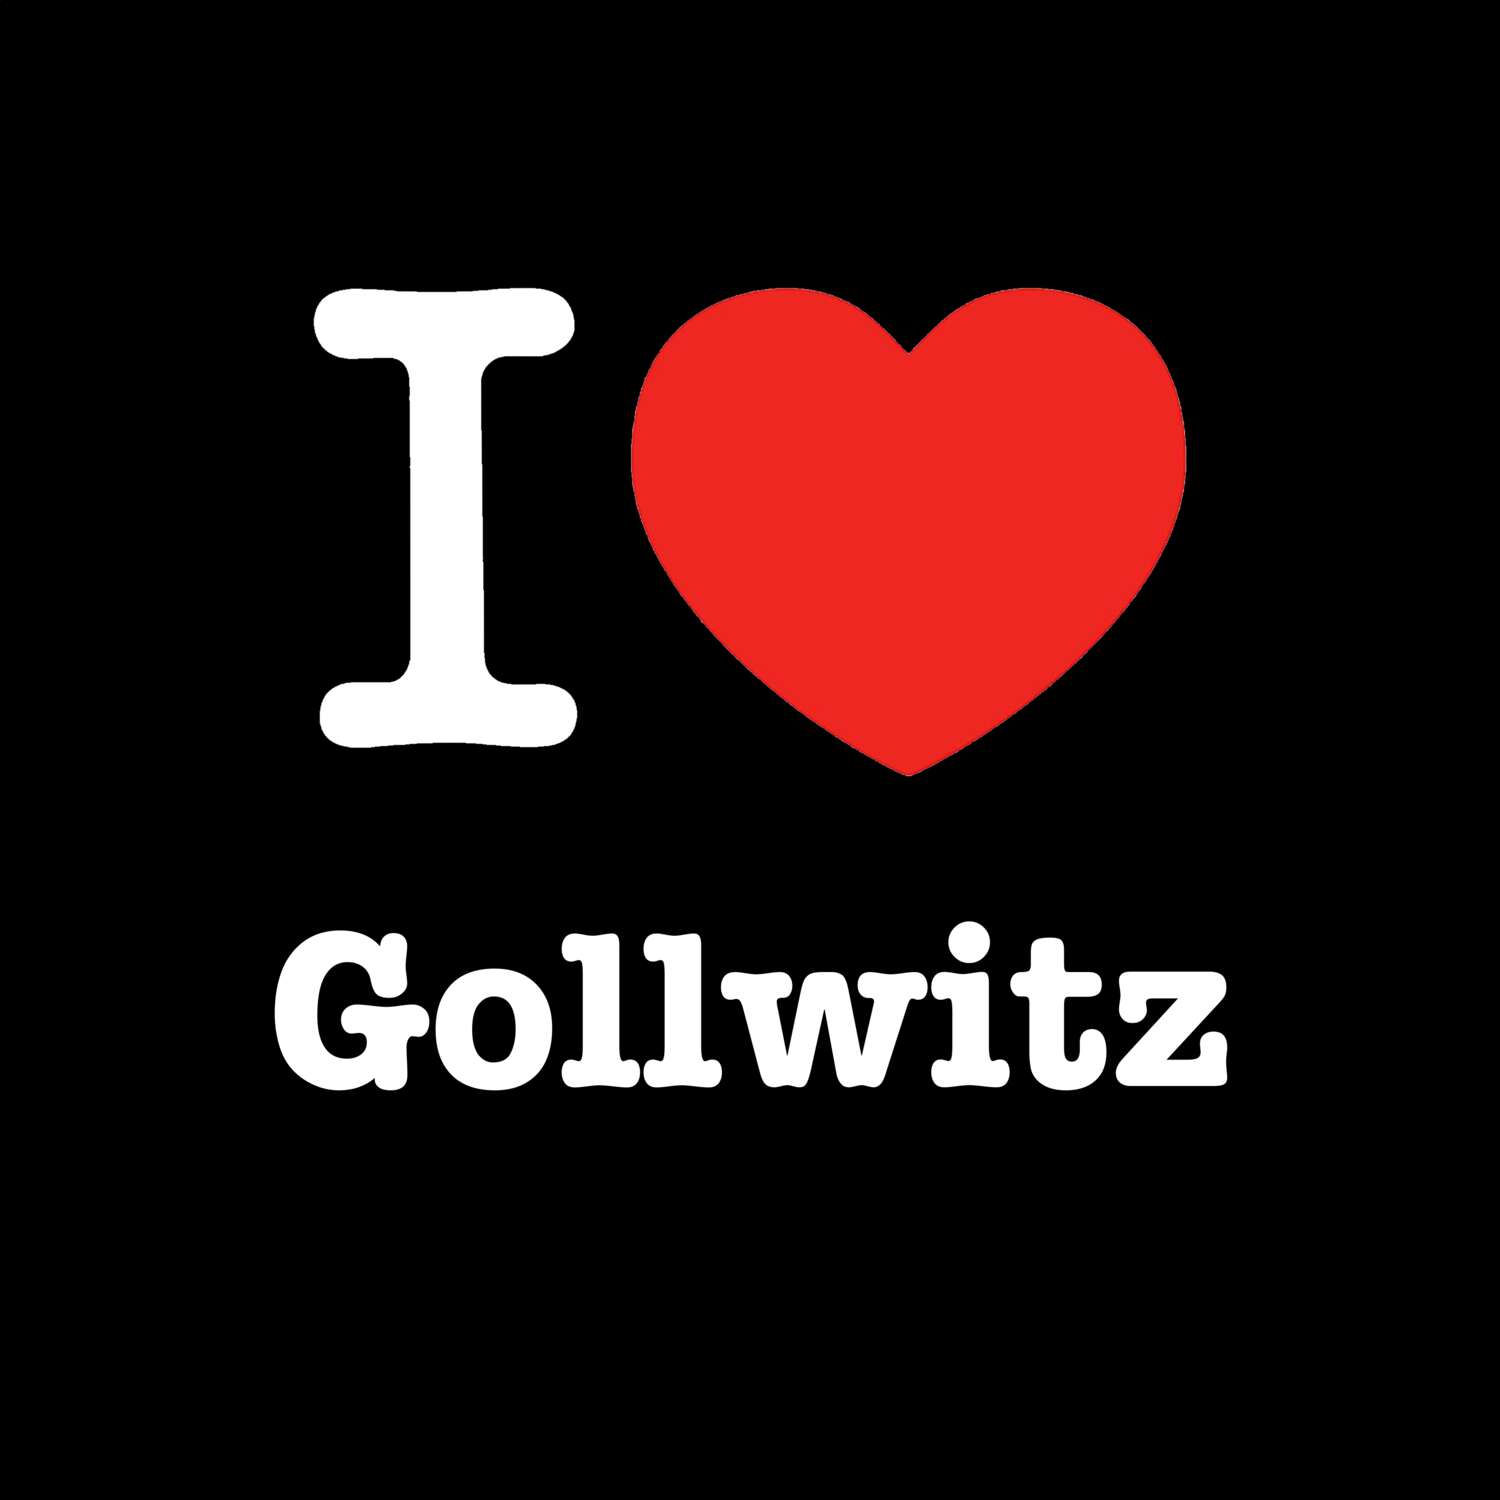 Gollwitz T-Shirt »I love«